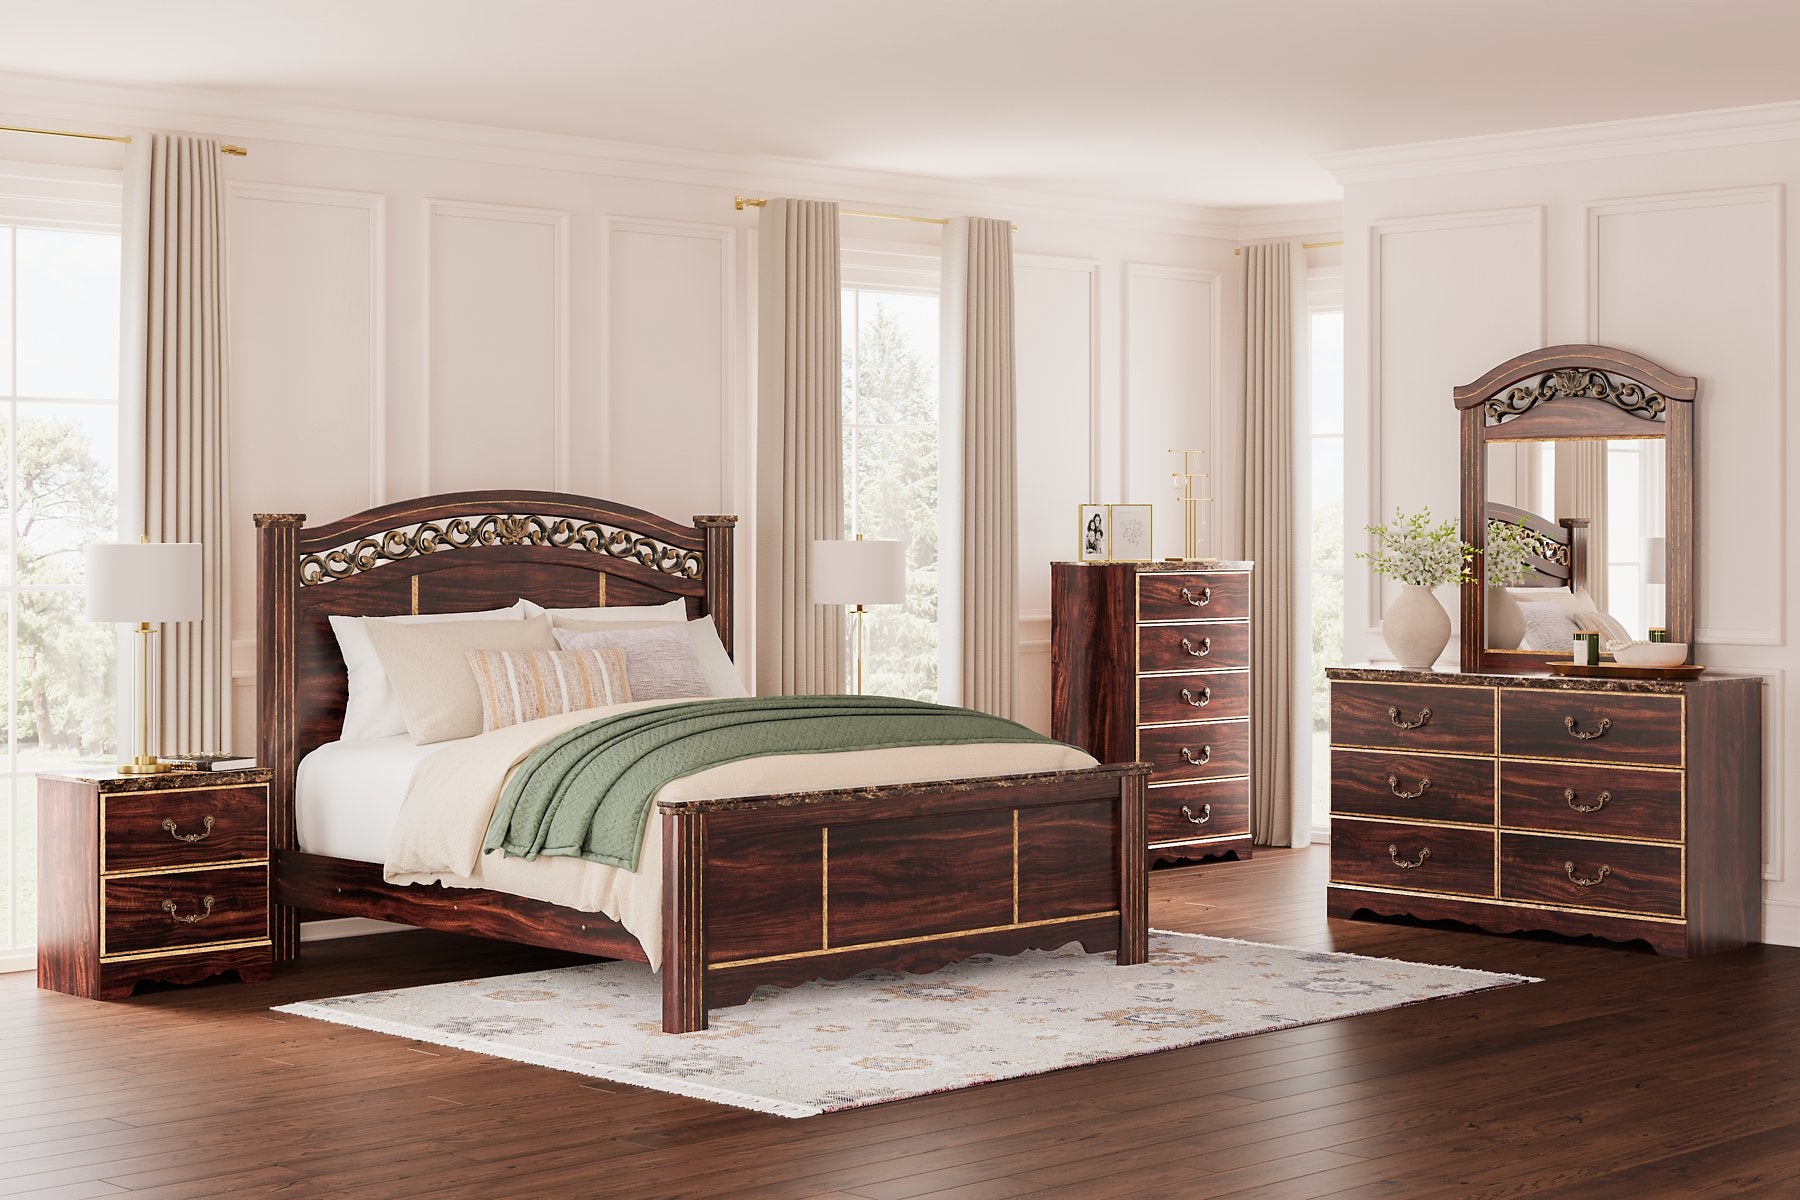 Glosmount Bed - Half Price Furniture